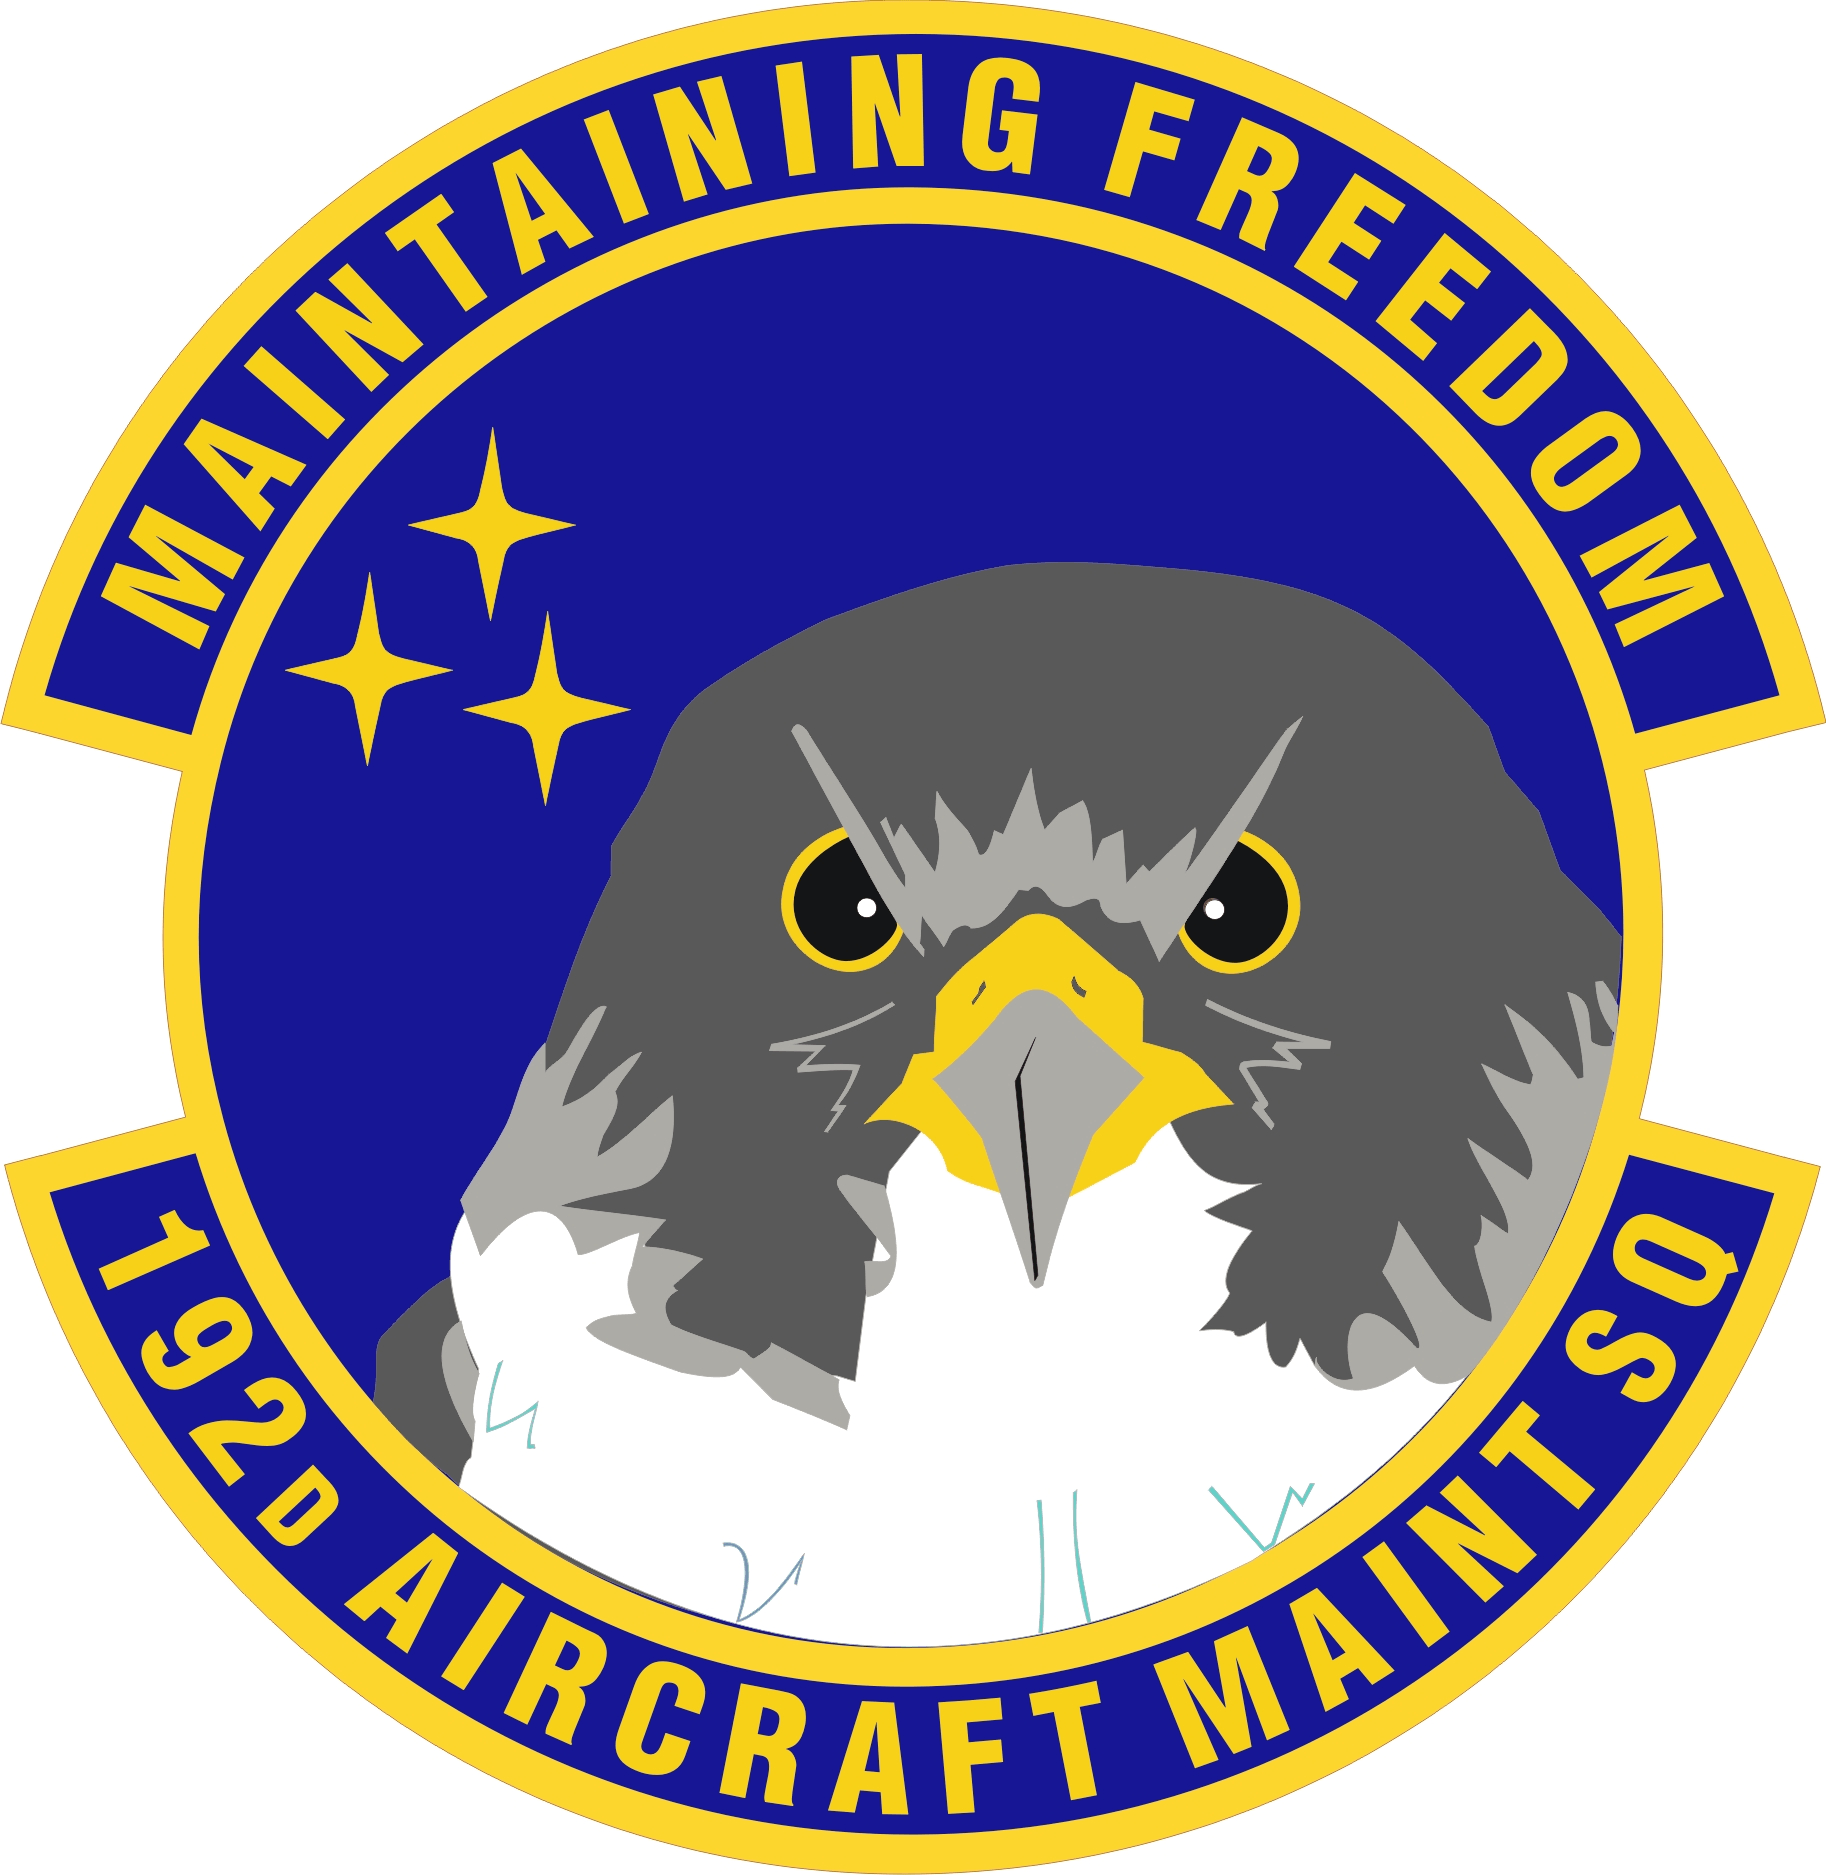 Aircraft Maintenance Logo - File:192 Aircraft Maintenance Sq emblem.png - Wikimedia Commons